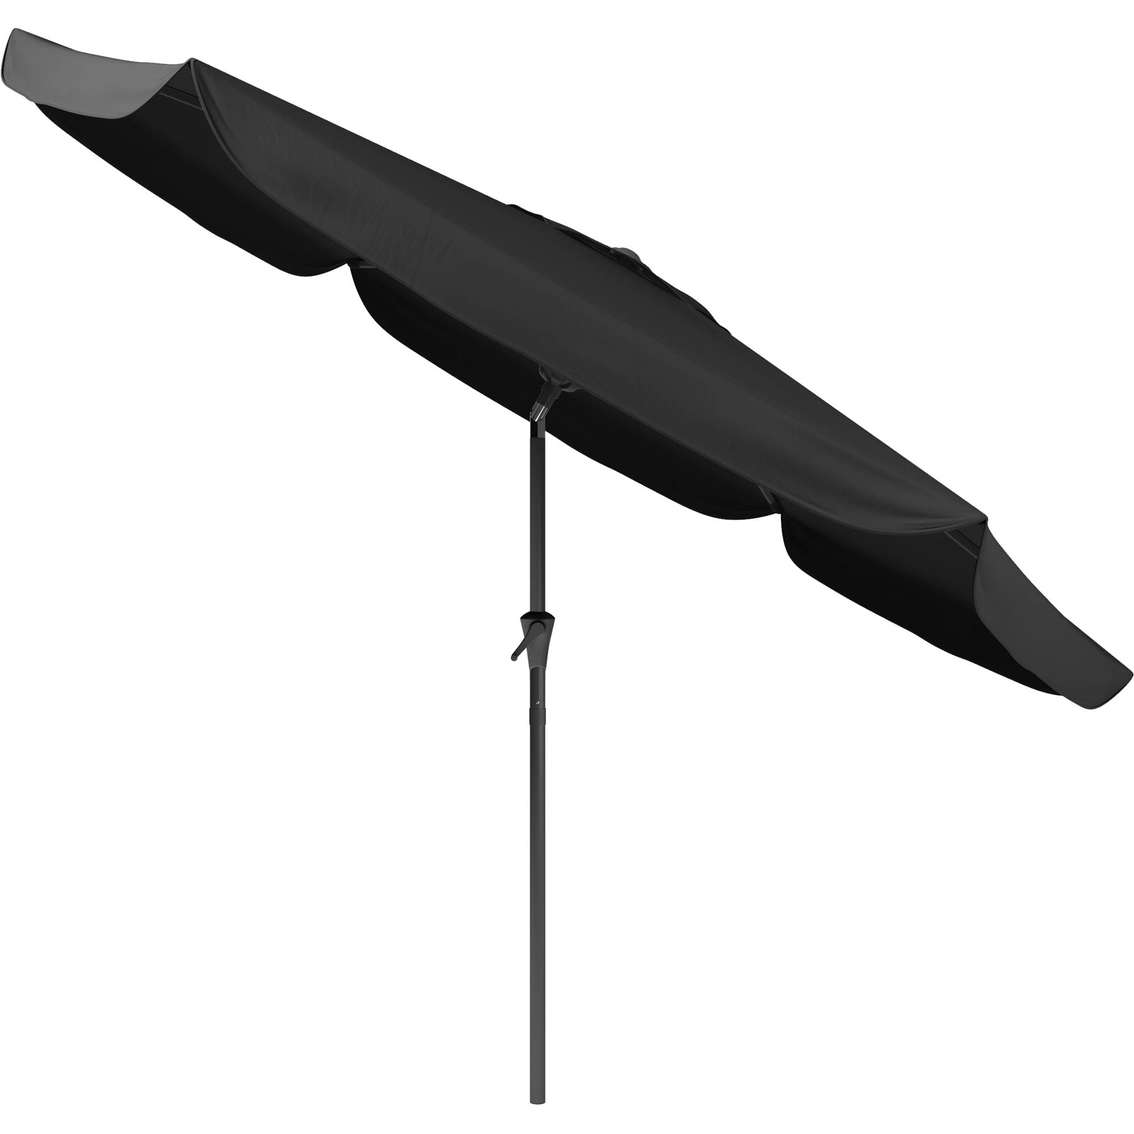 CorLiving Tilting Patio Umbrella - Image 2 of 4